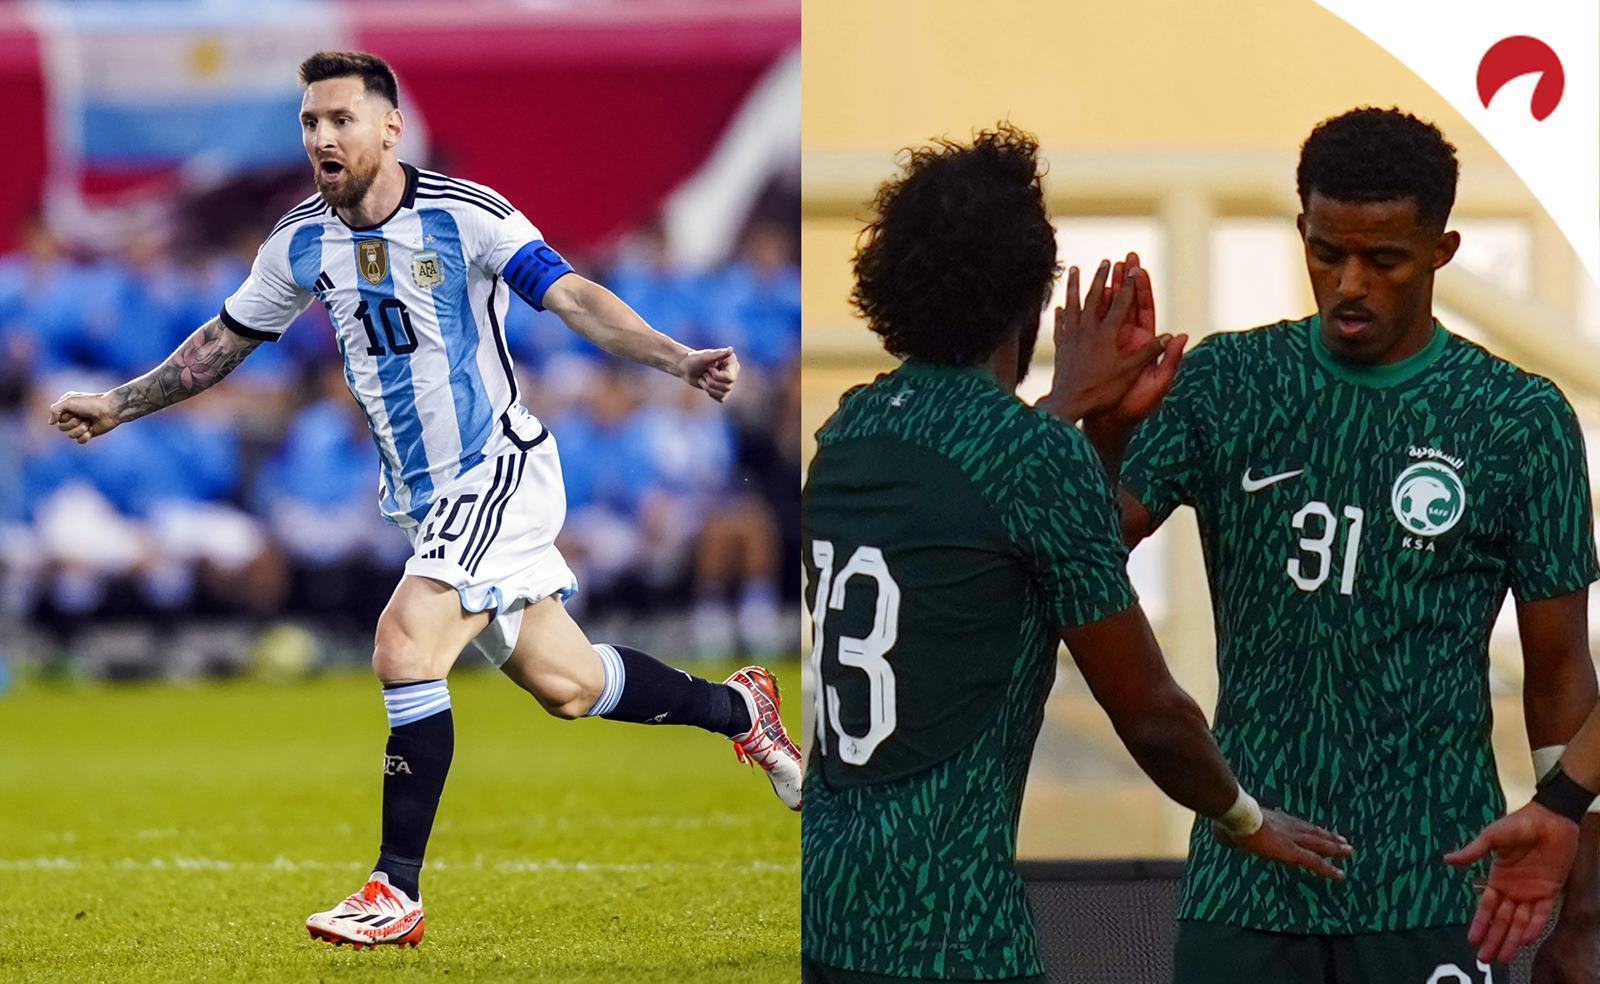 Argentina x Arábia Saudita na Copa Do Mundo 2022